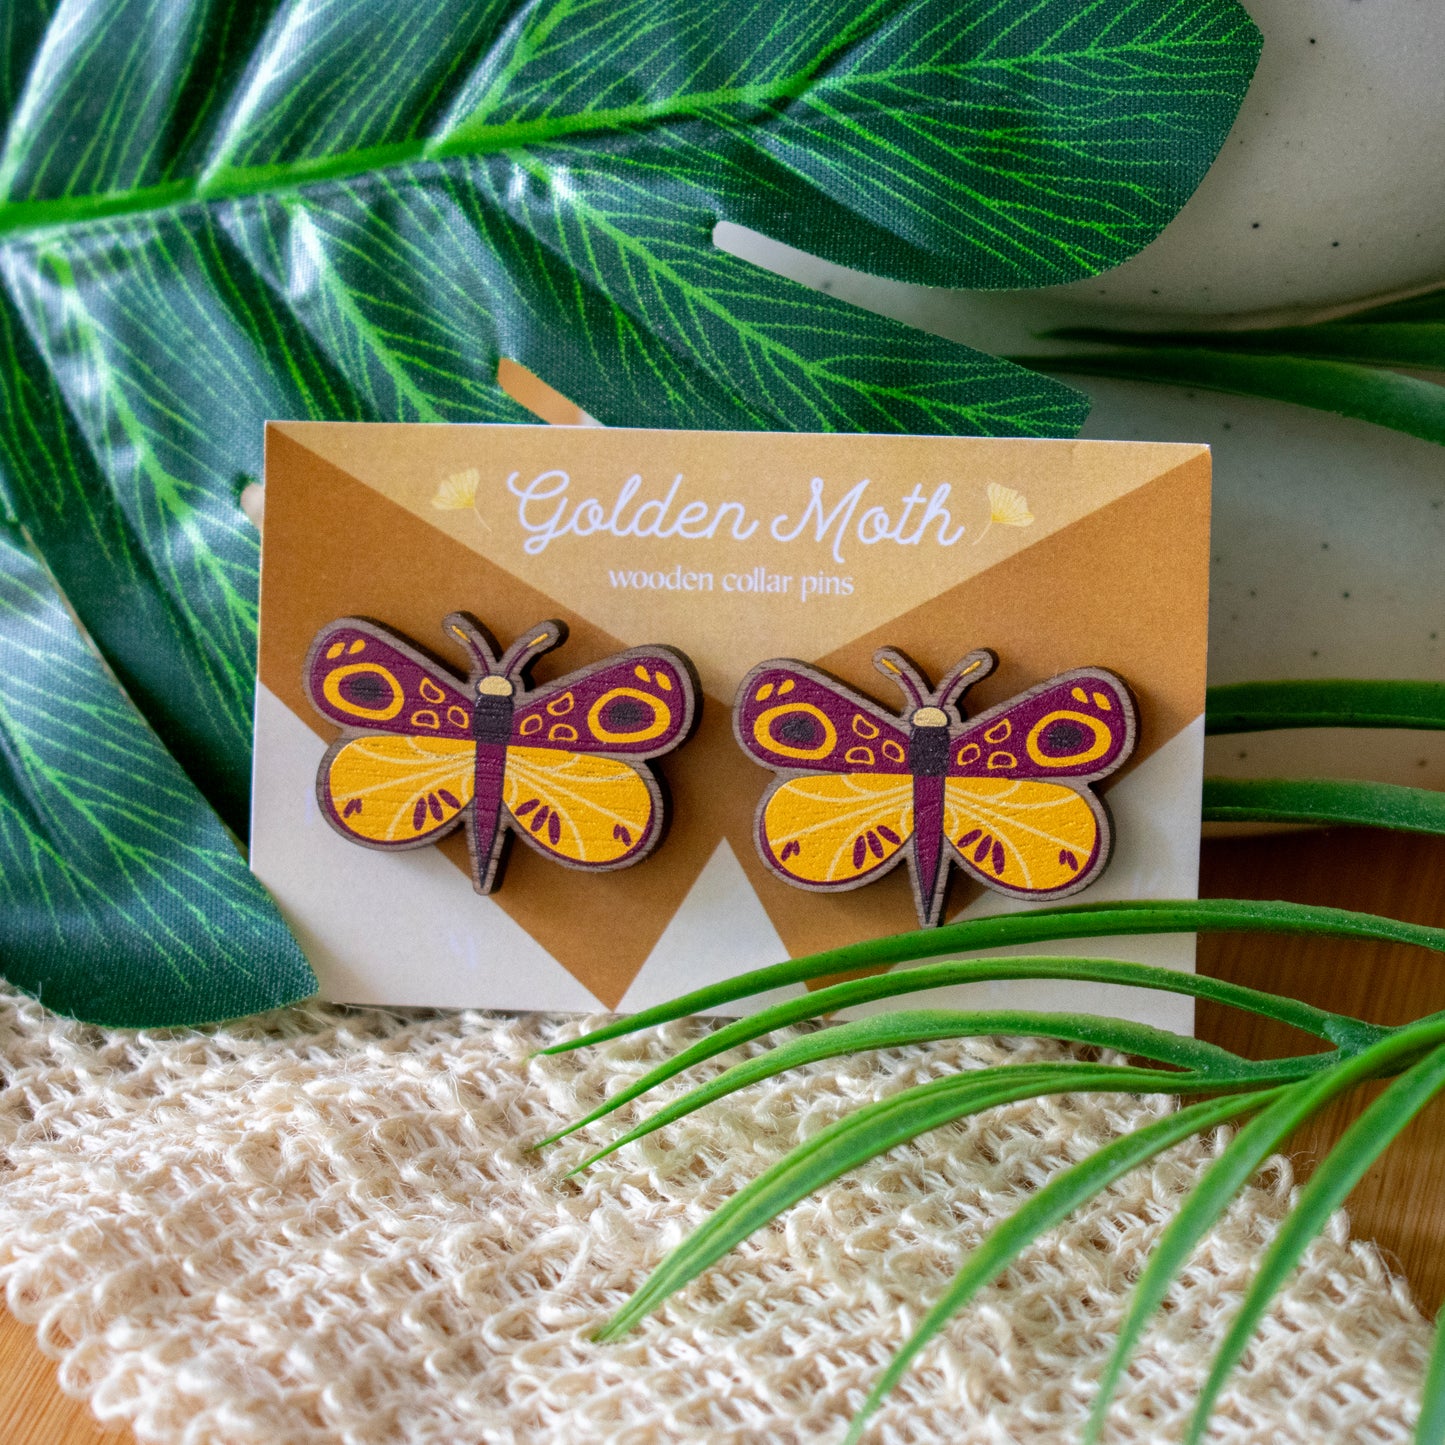 Golden Moth printed wooden collar pins